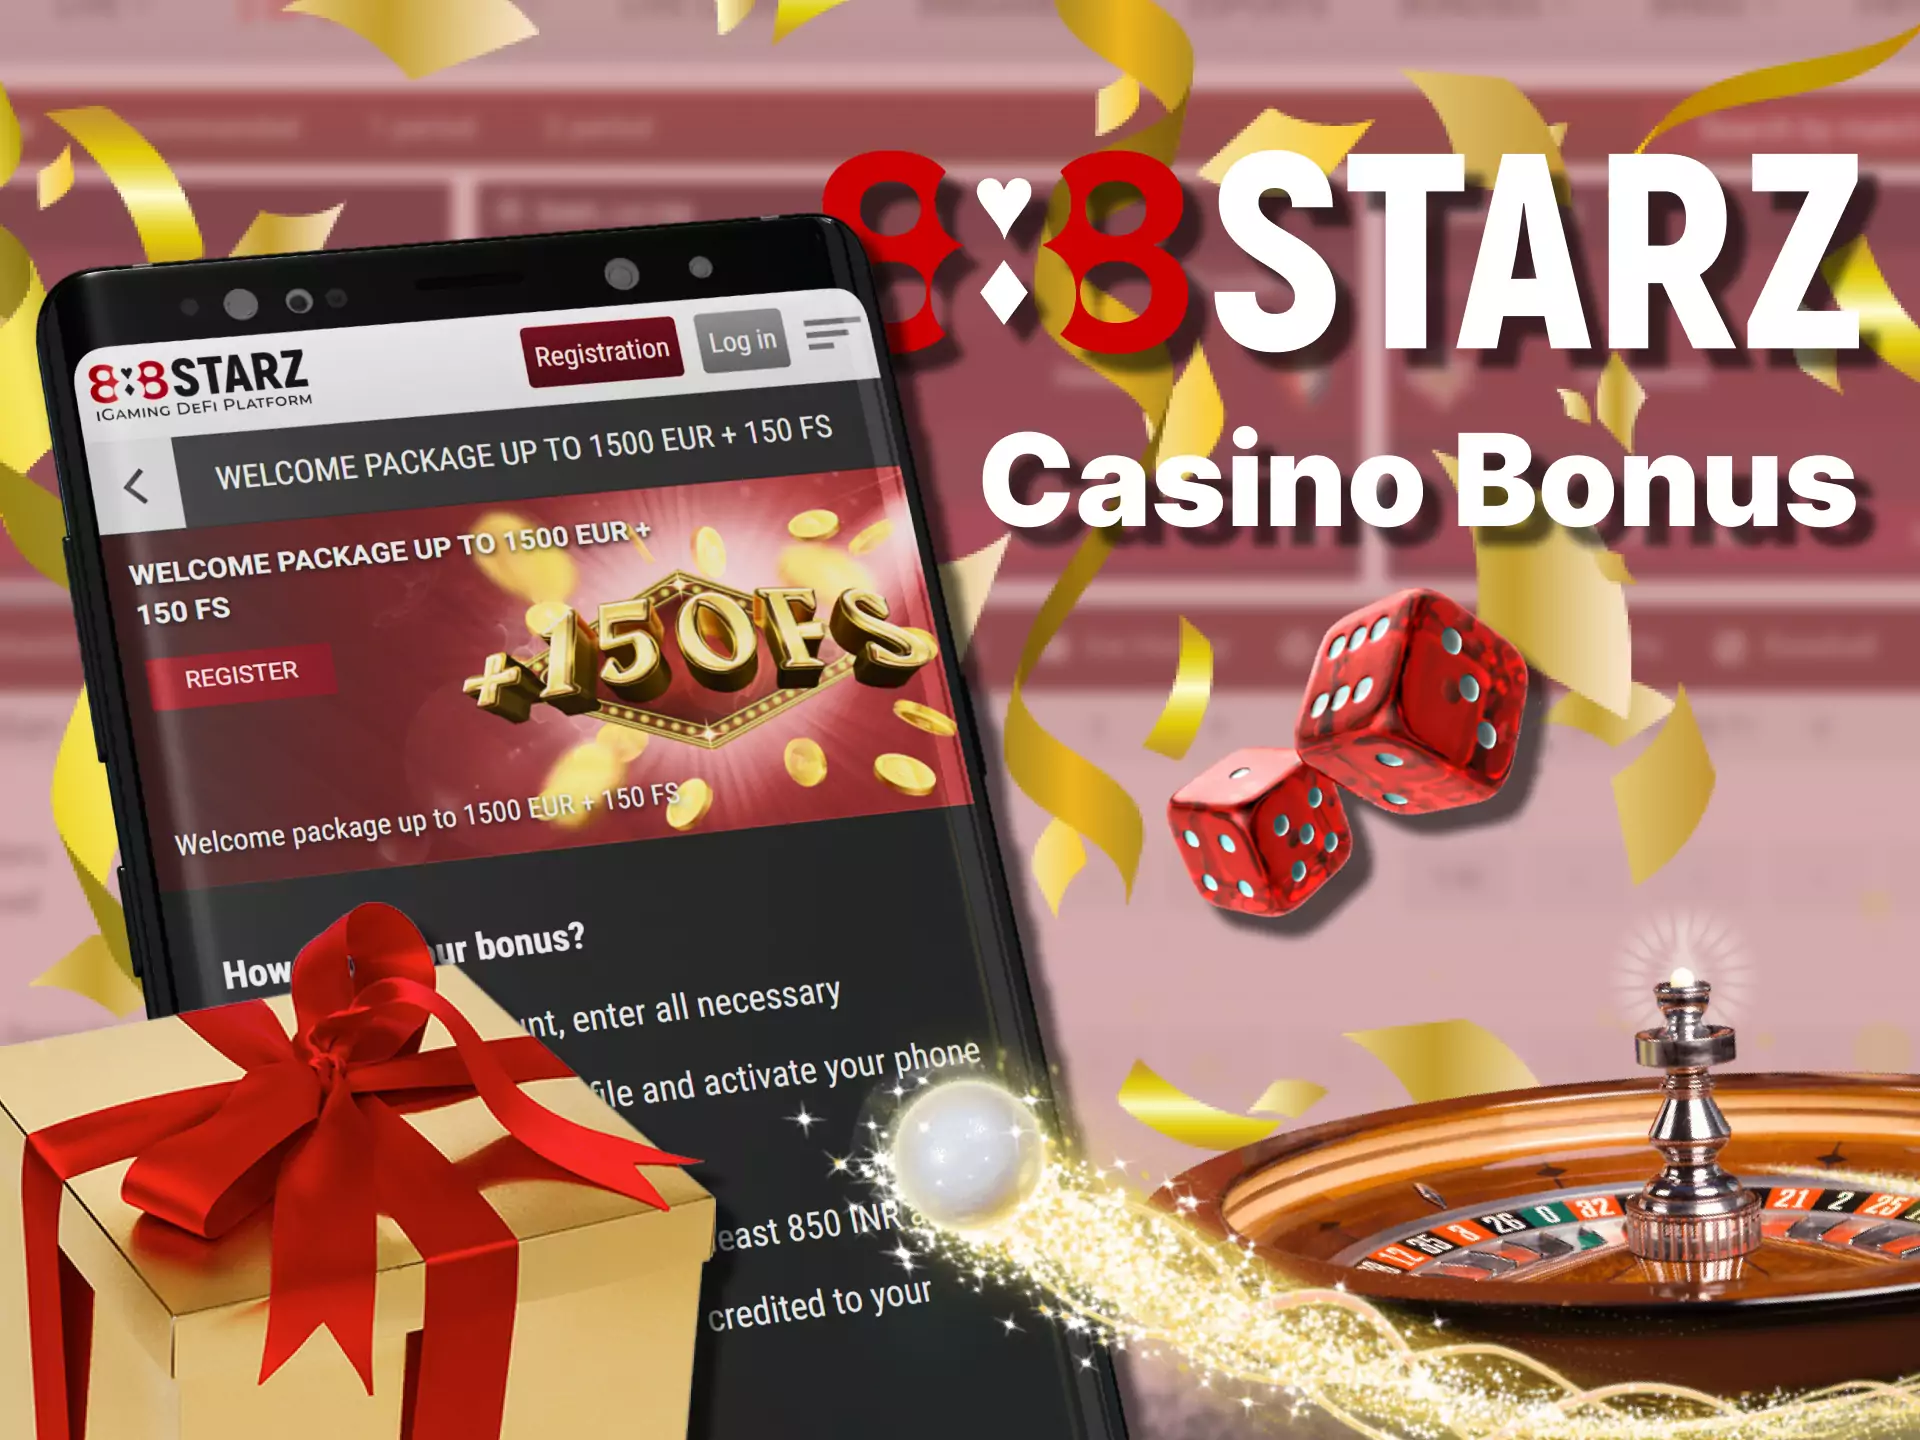 Get your special bonus for Casino in the 888starz app.